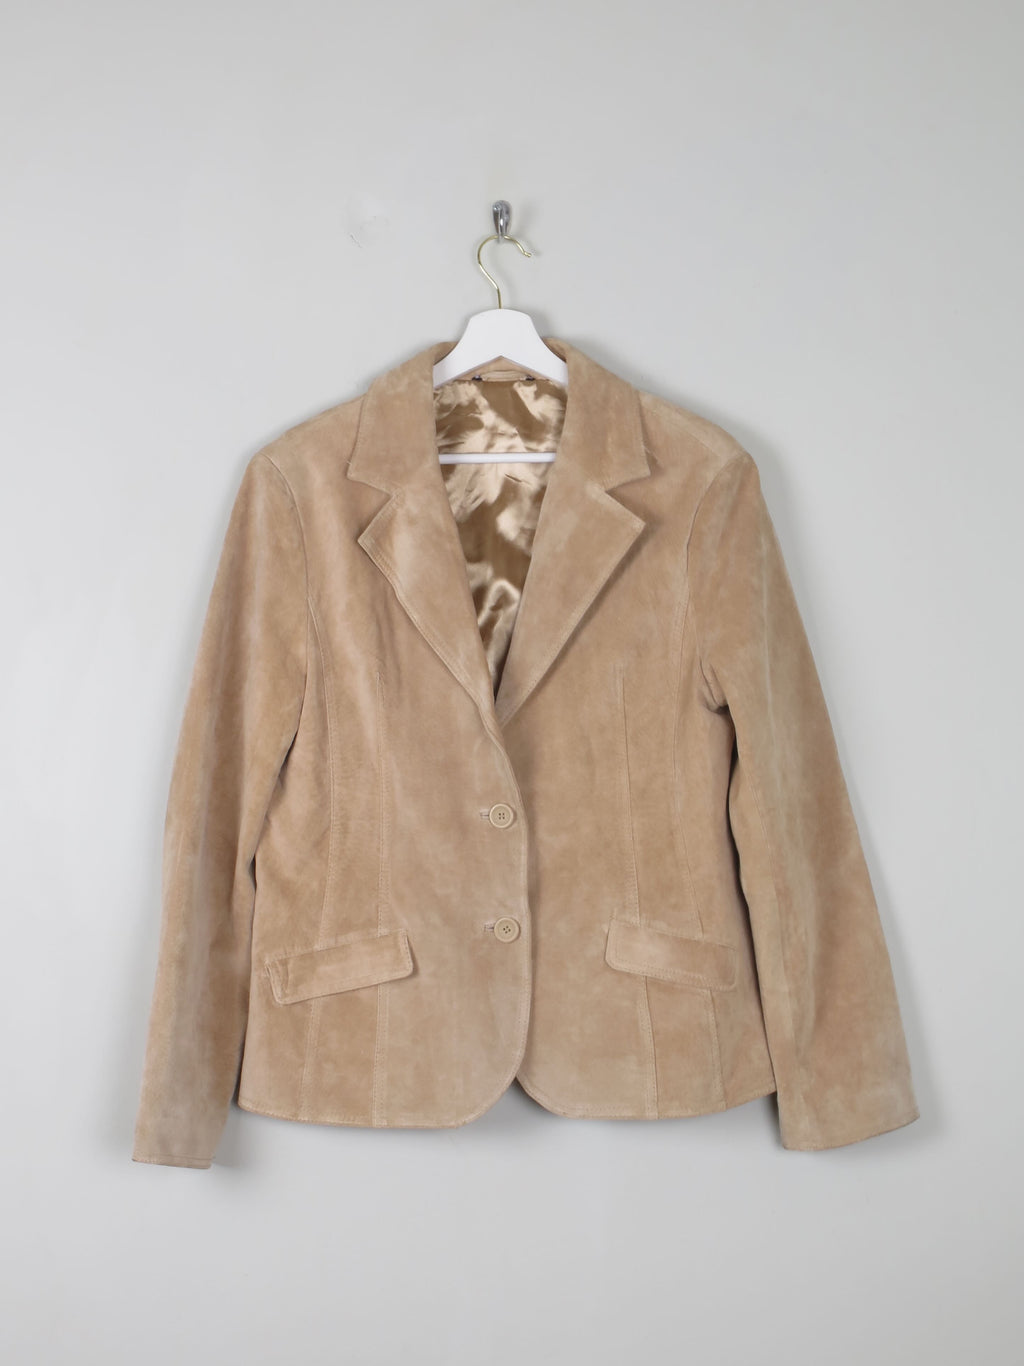 Women's Beige Suede Fitted Vintage Jacket 12/14